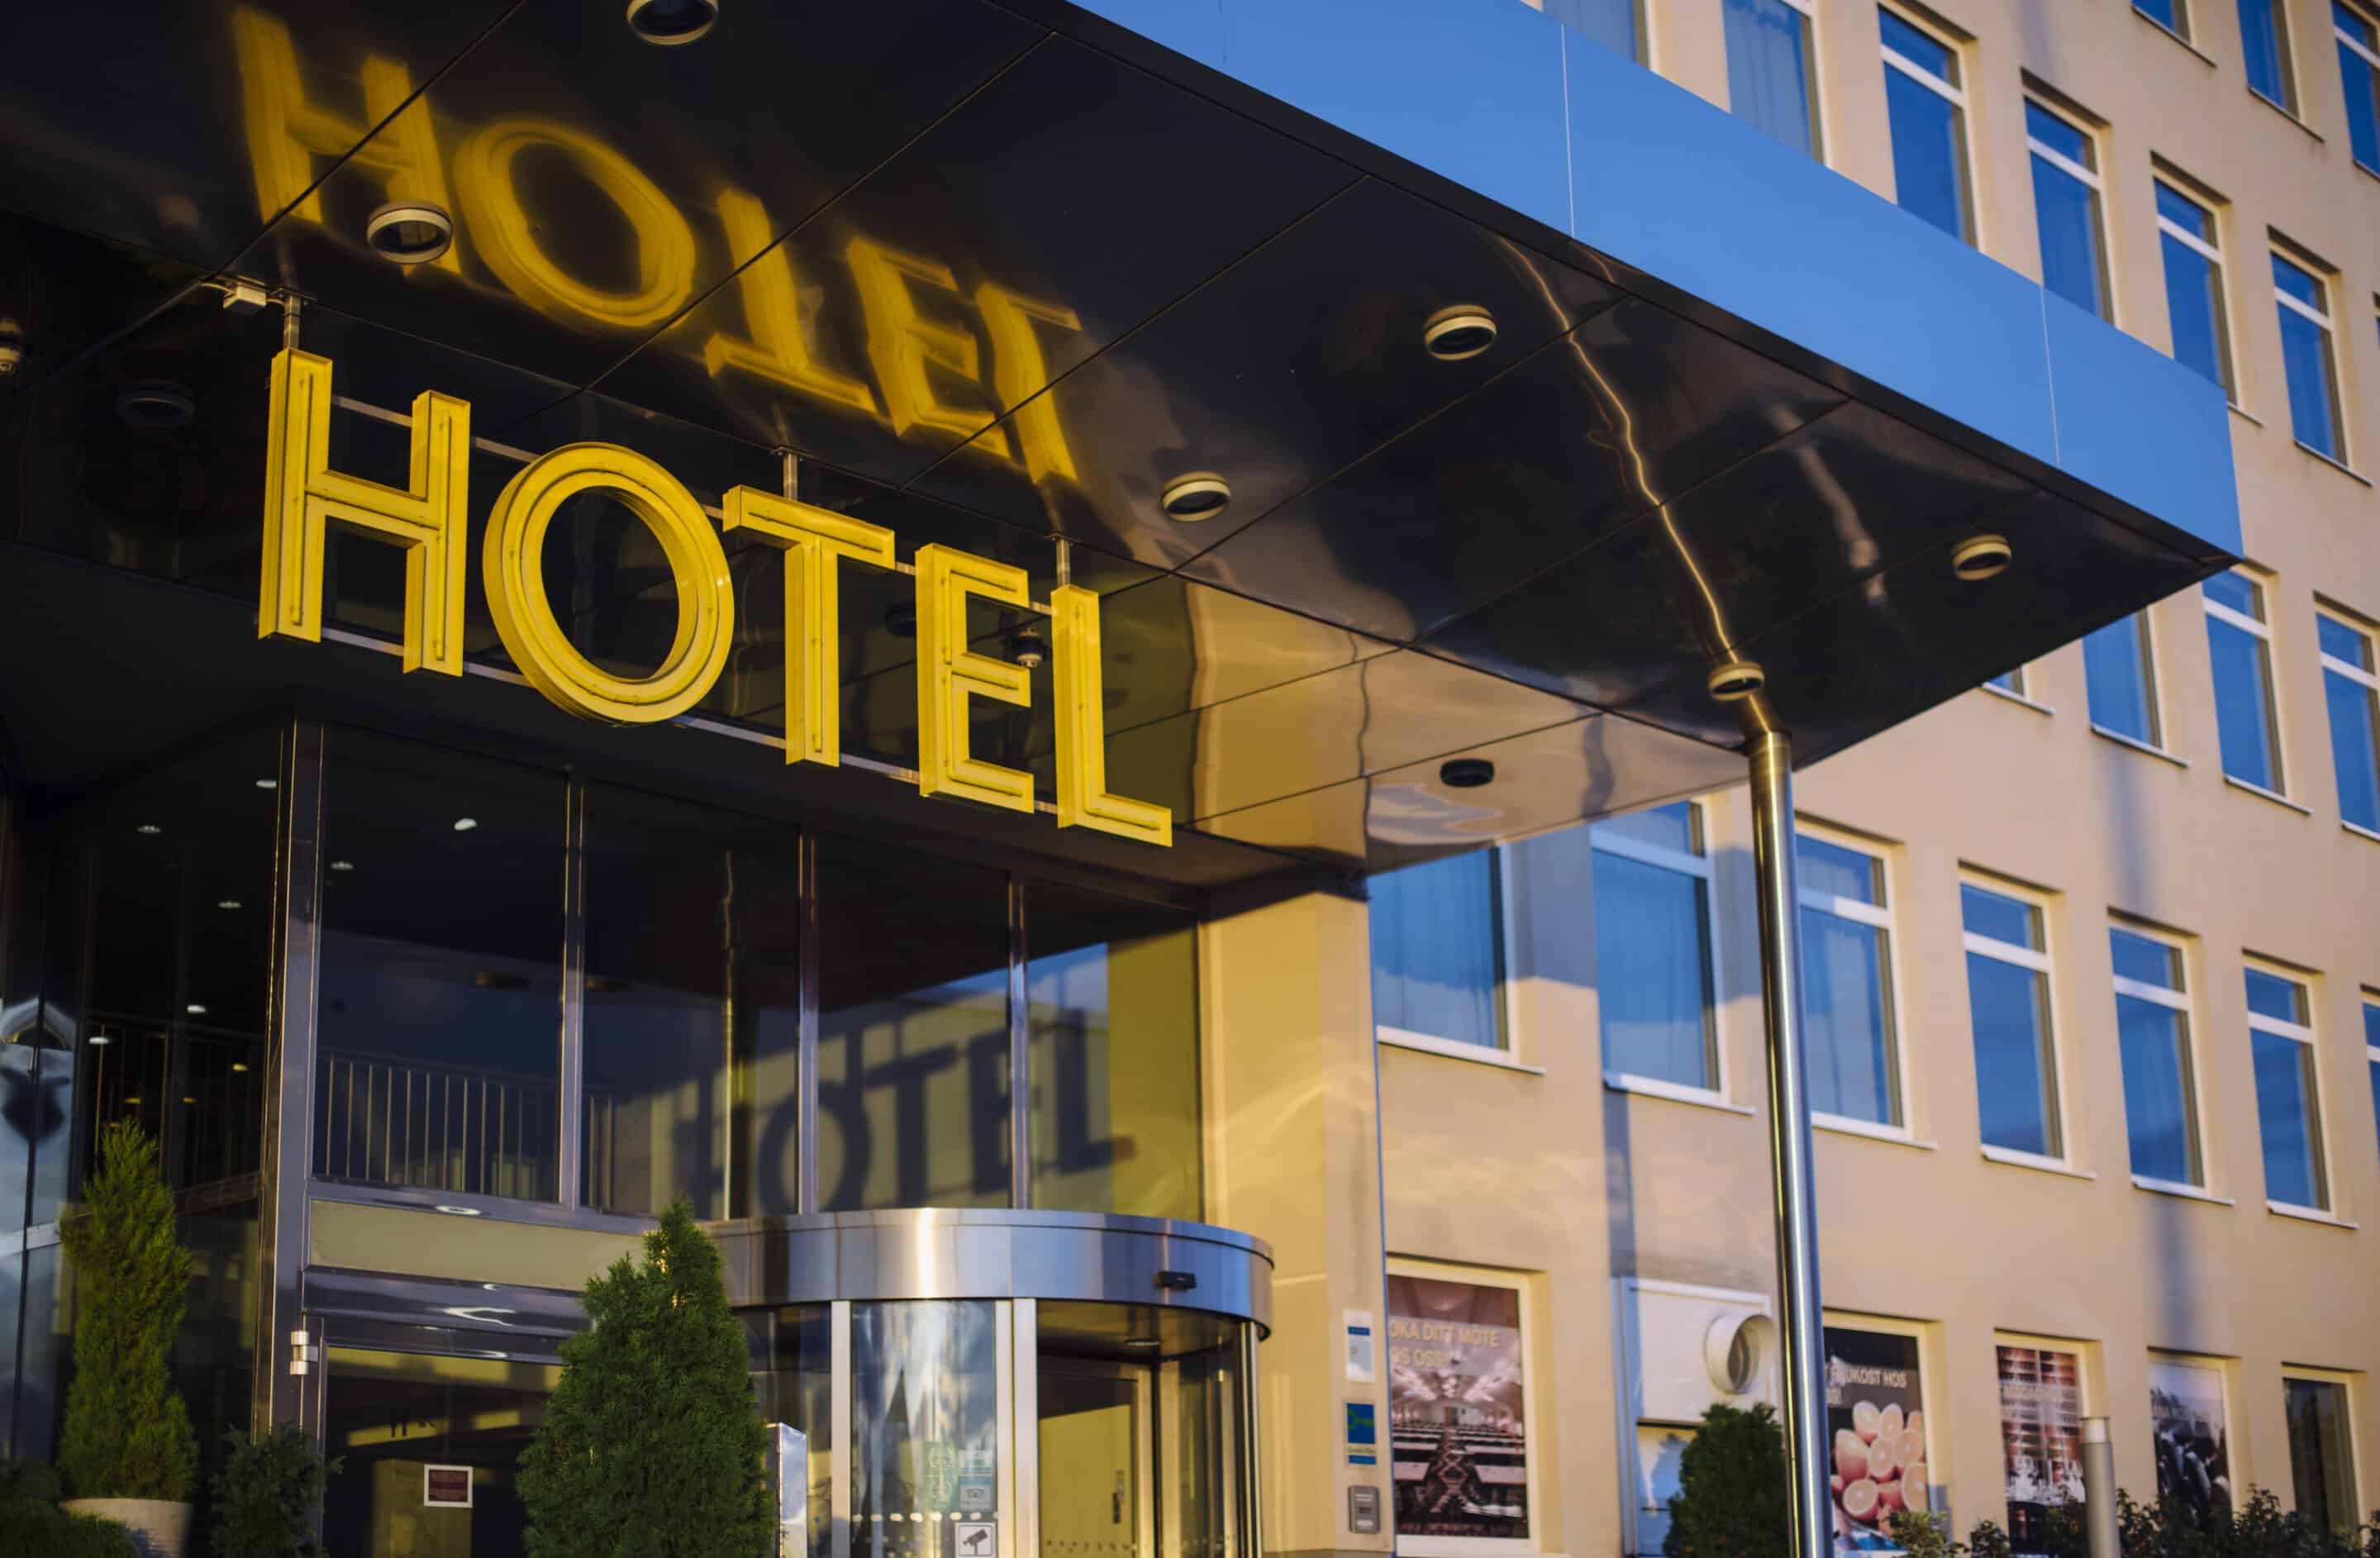 Best Western Plus Stockholm Bromma Entré Hotellskylt